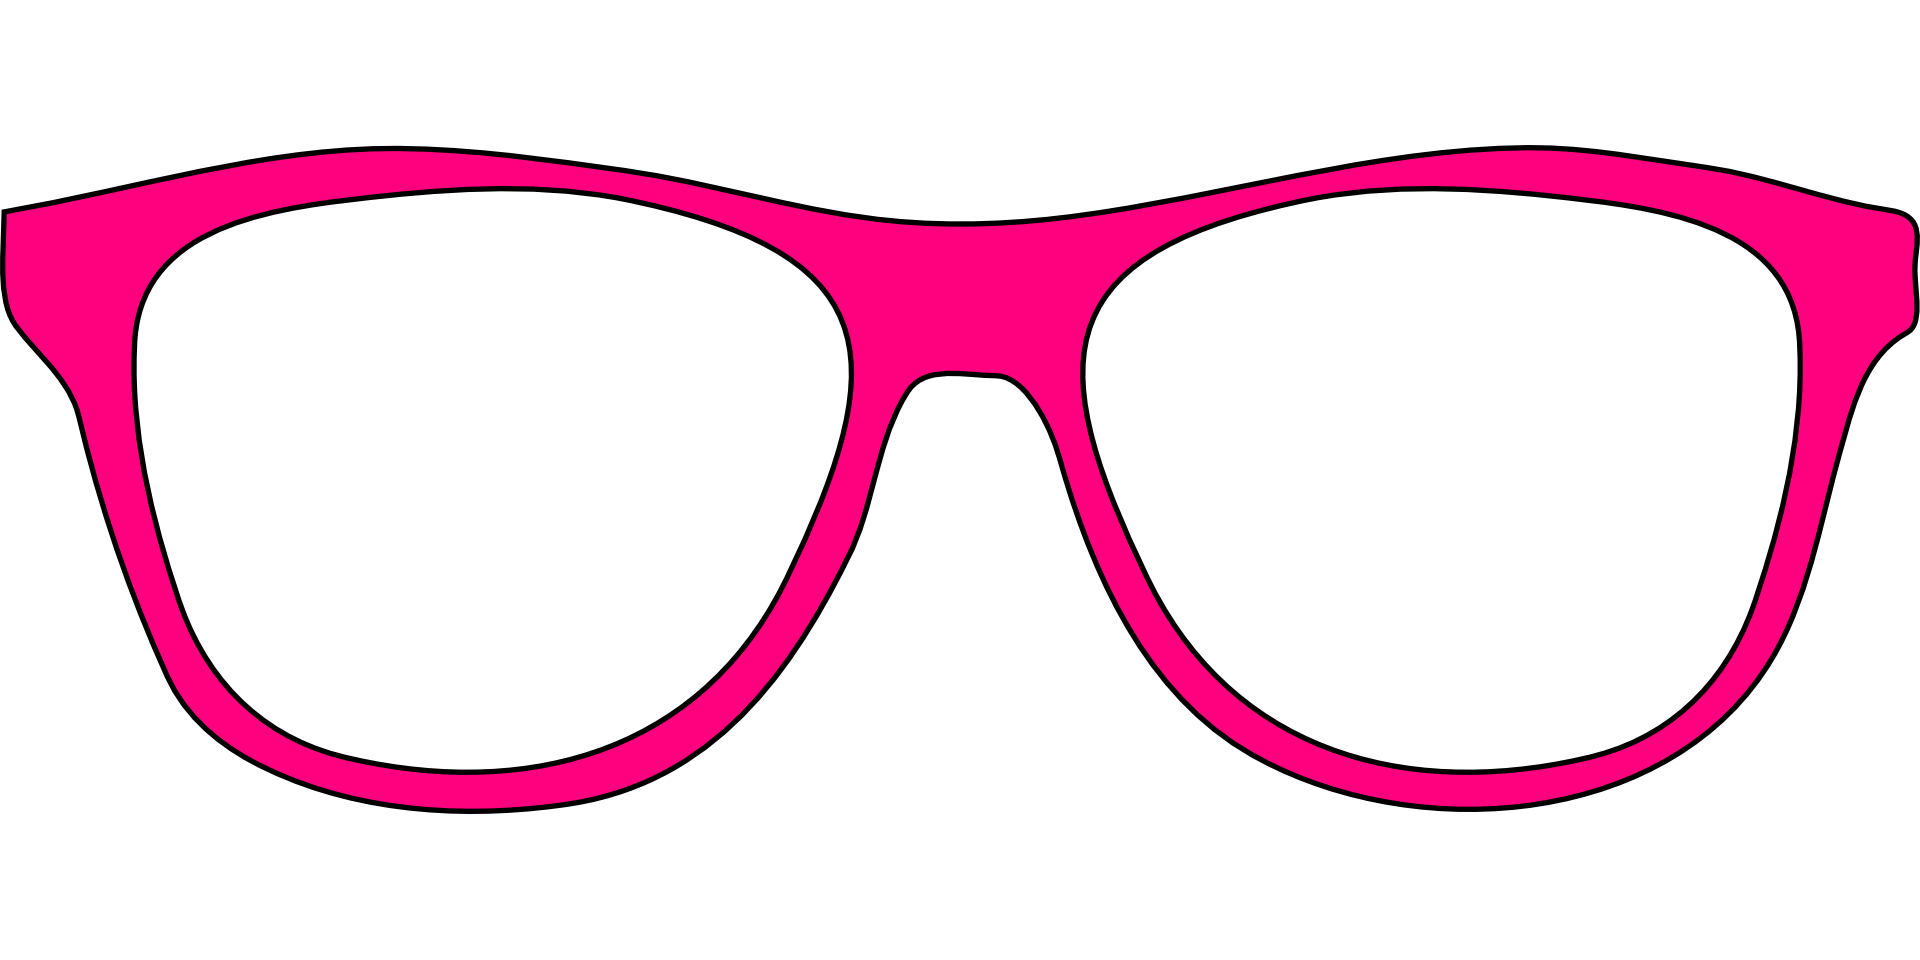 Pink eye glasses template. Vision clipart eyeglass frame